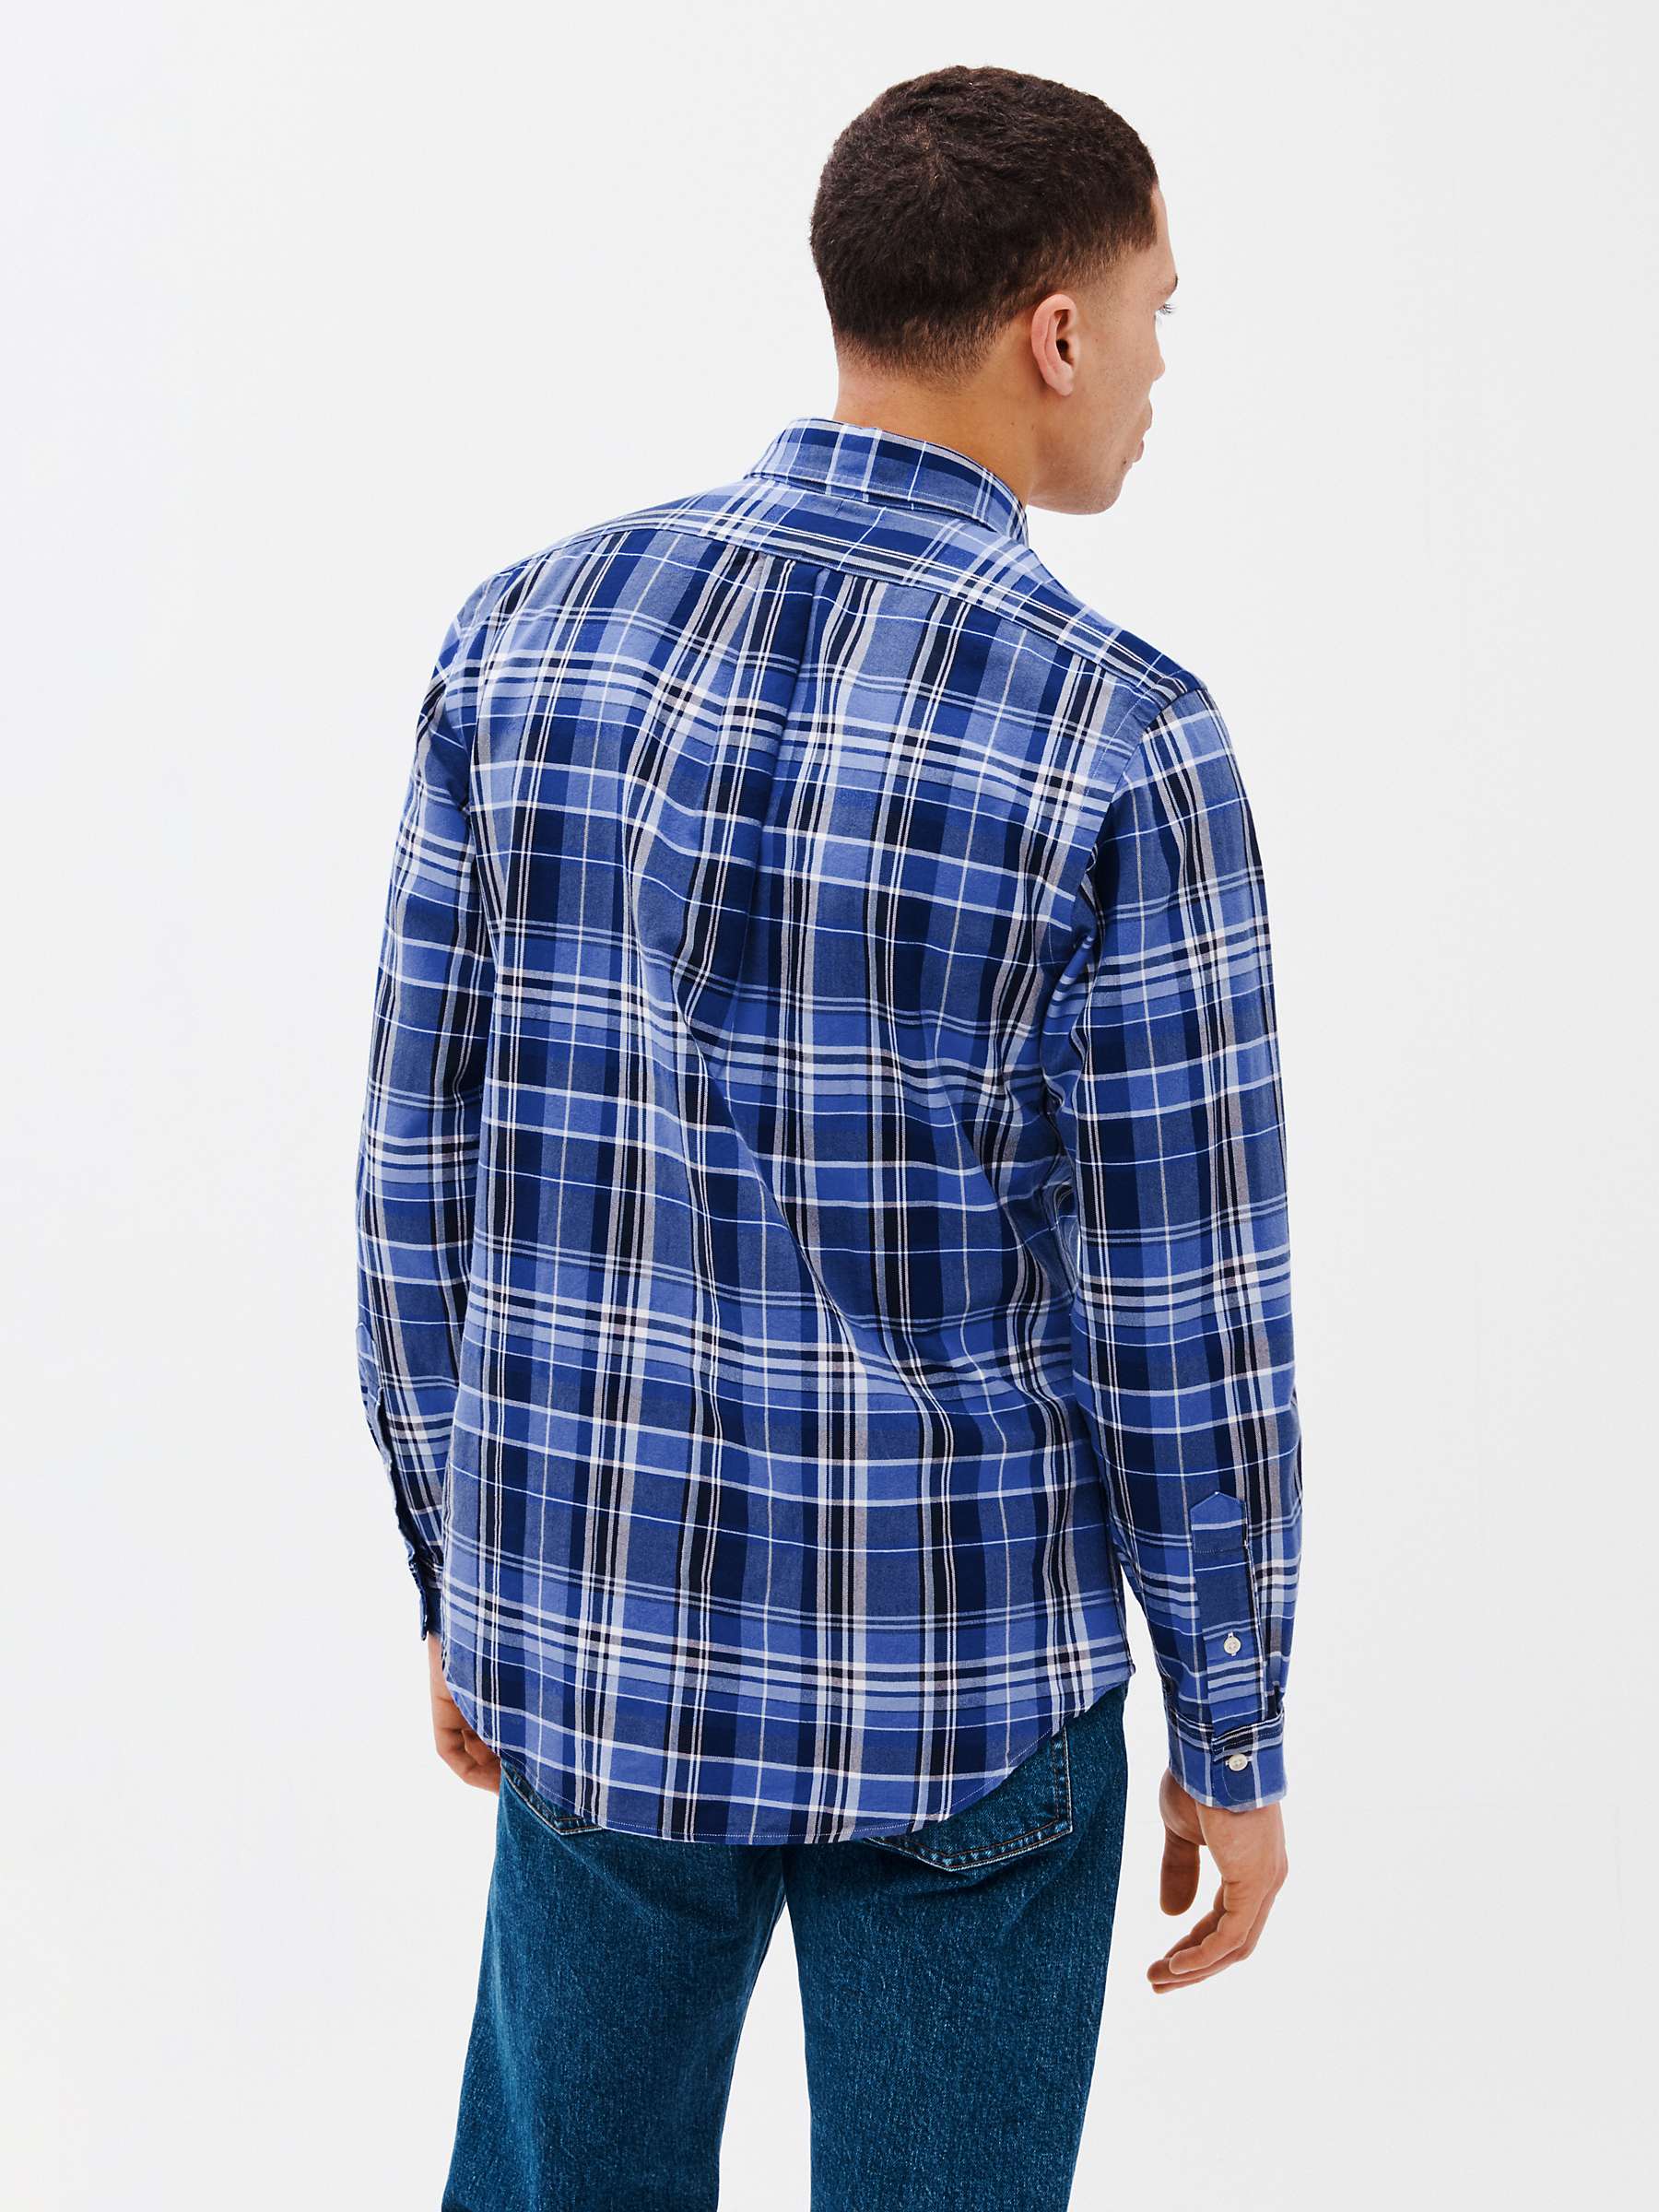 Buy Polo Ralph Lauren Long Sleeve Check Shirt, Blue/Multi Online at johnlewis.com